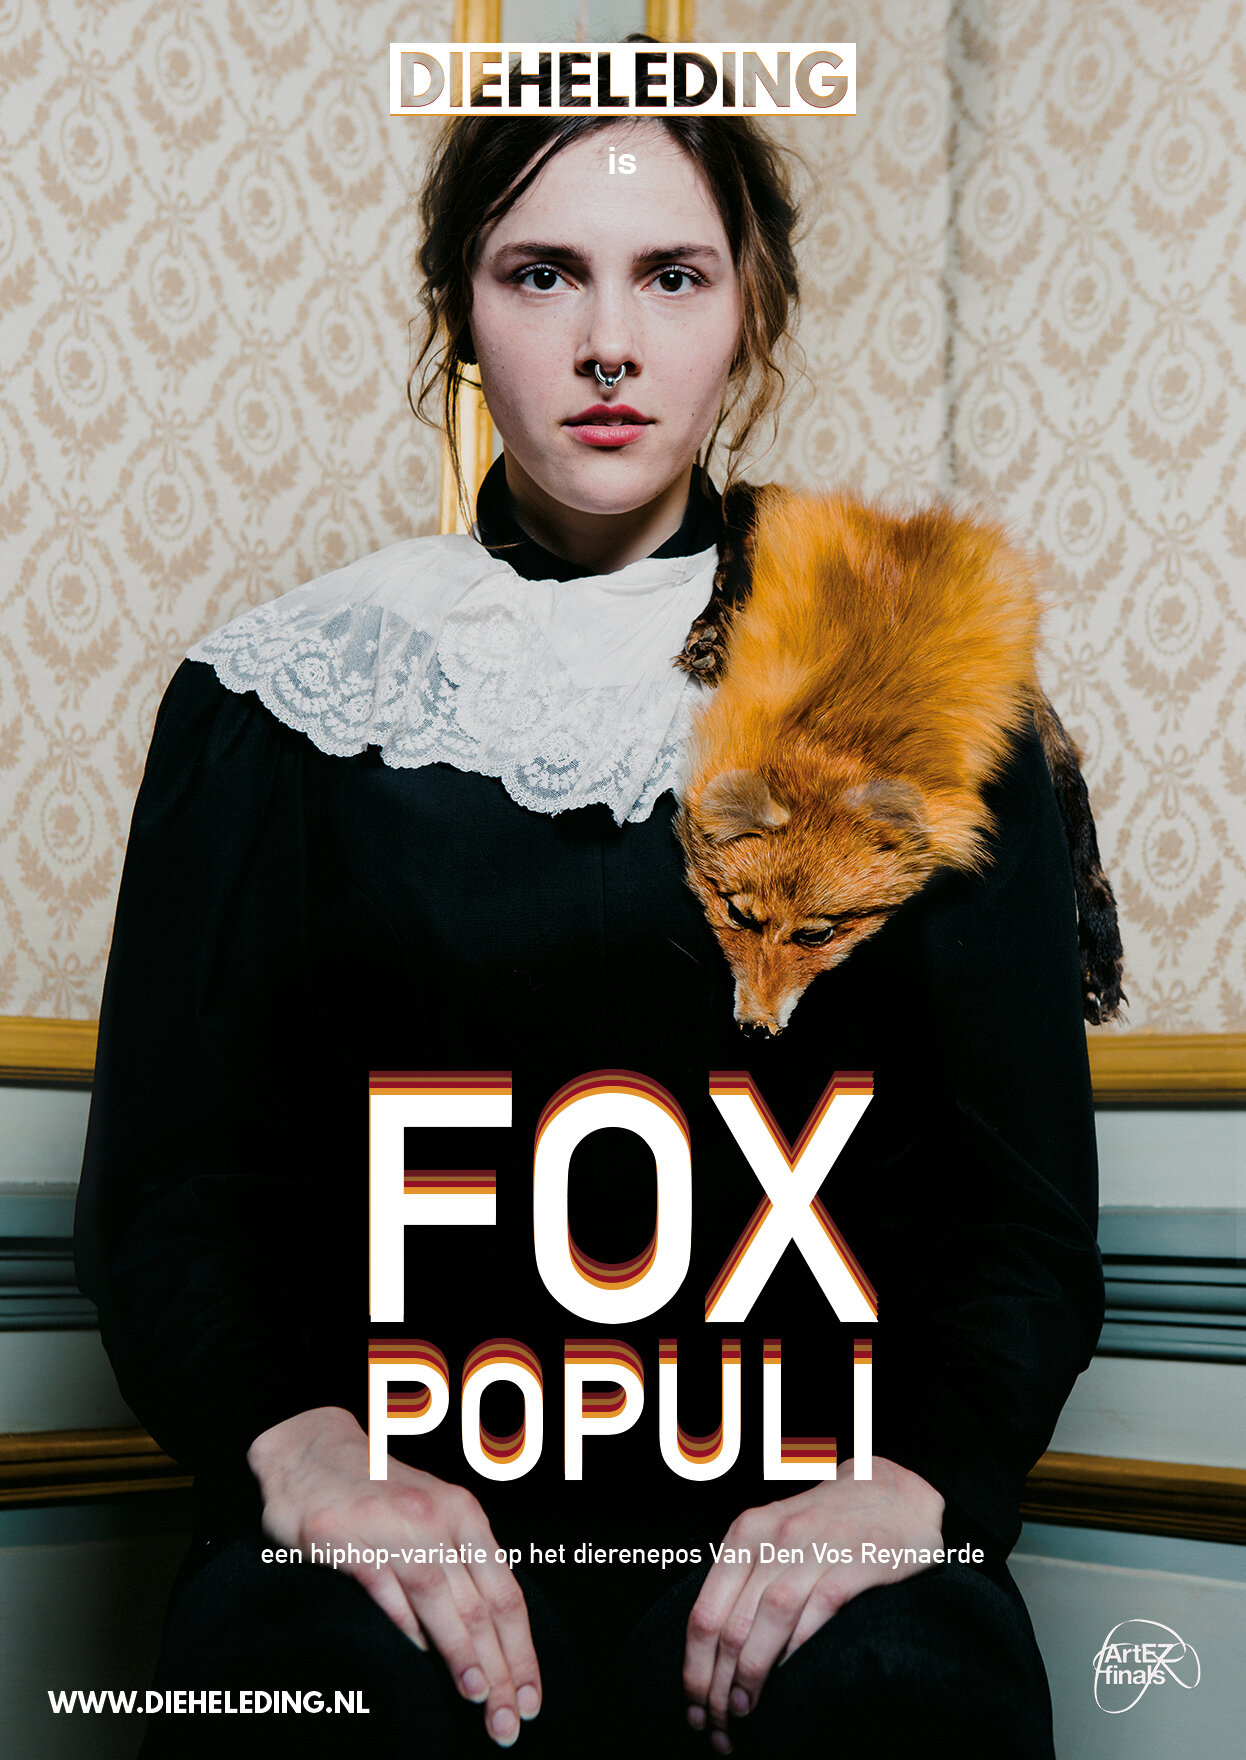 Fox populi poster A3 - v4 9 aprilAnnebel@0,25x.jpg